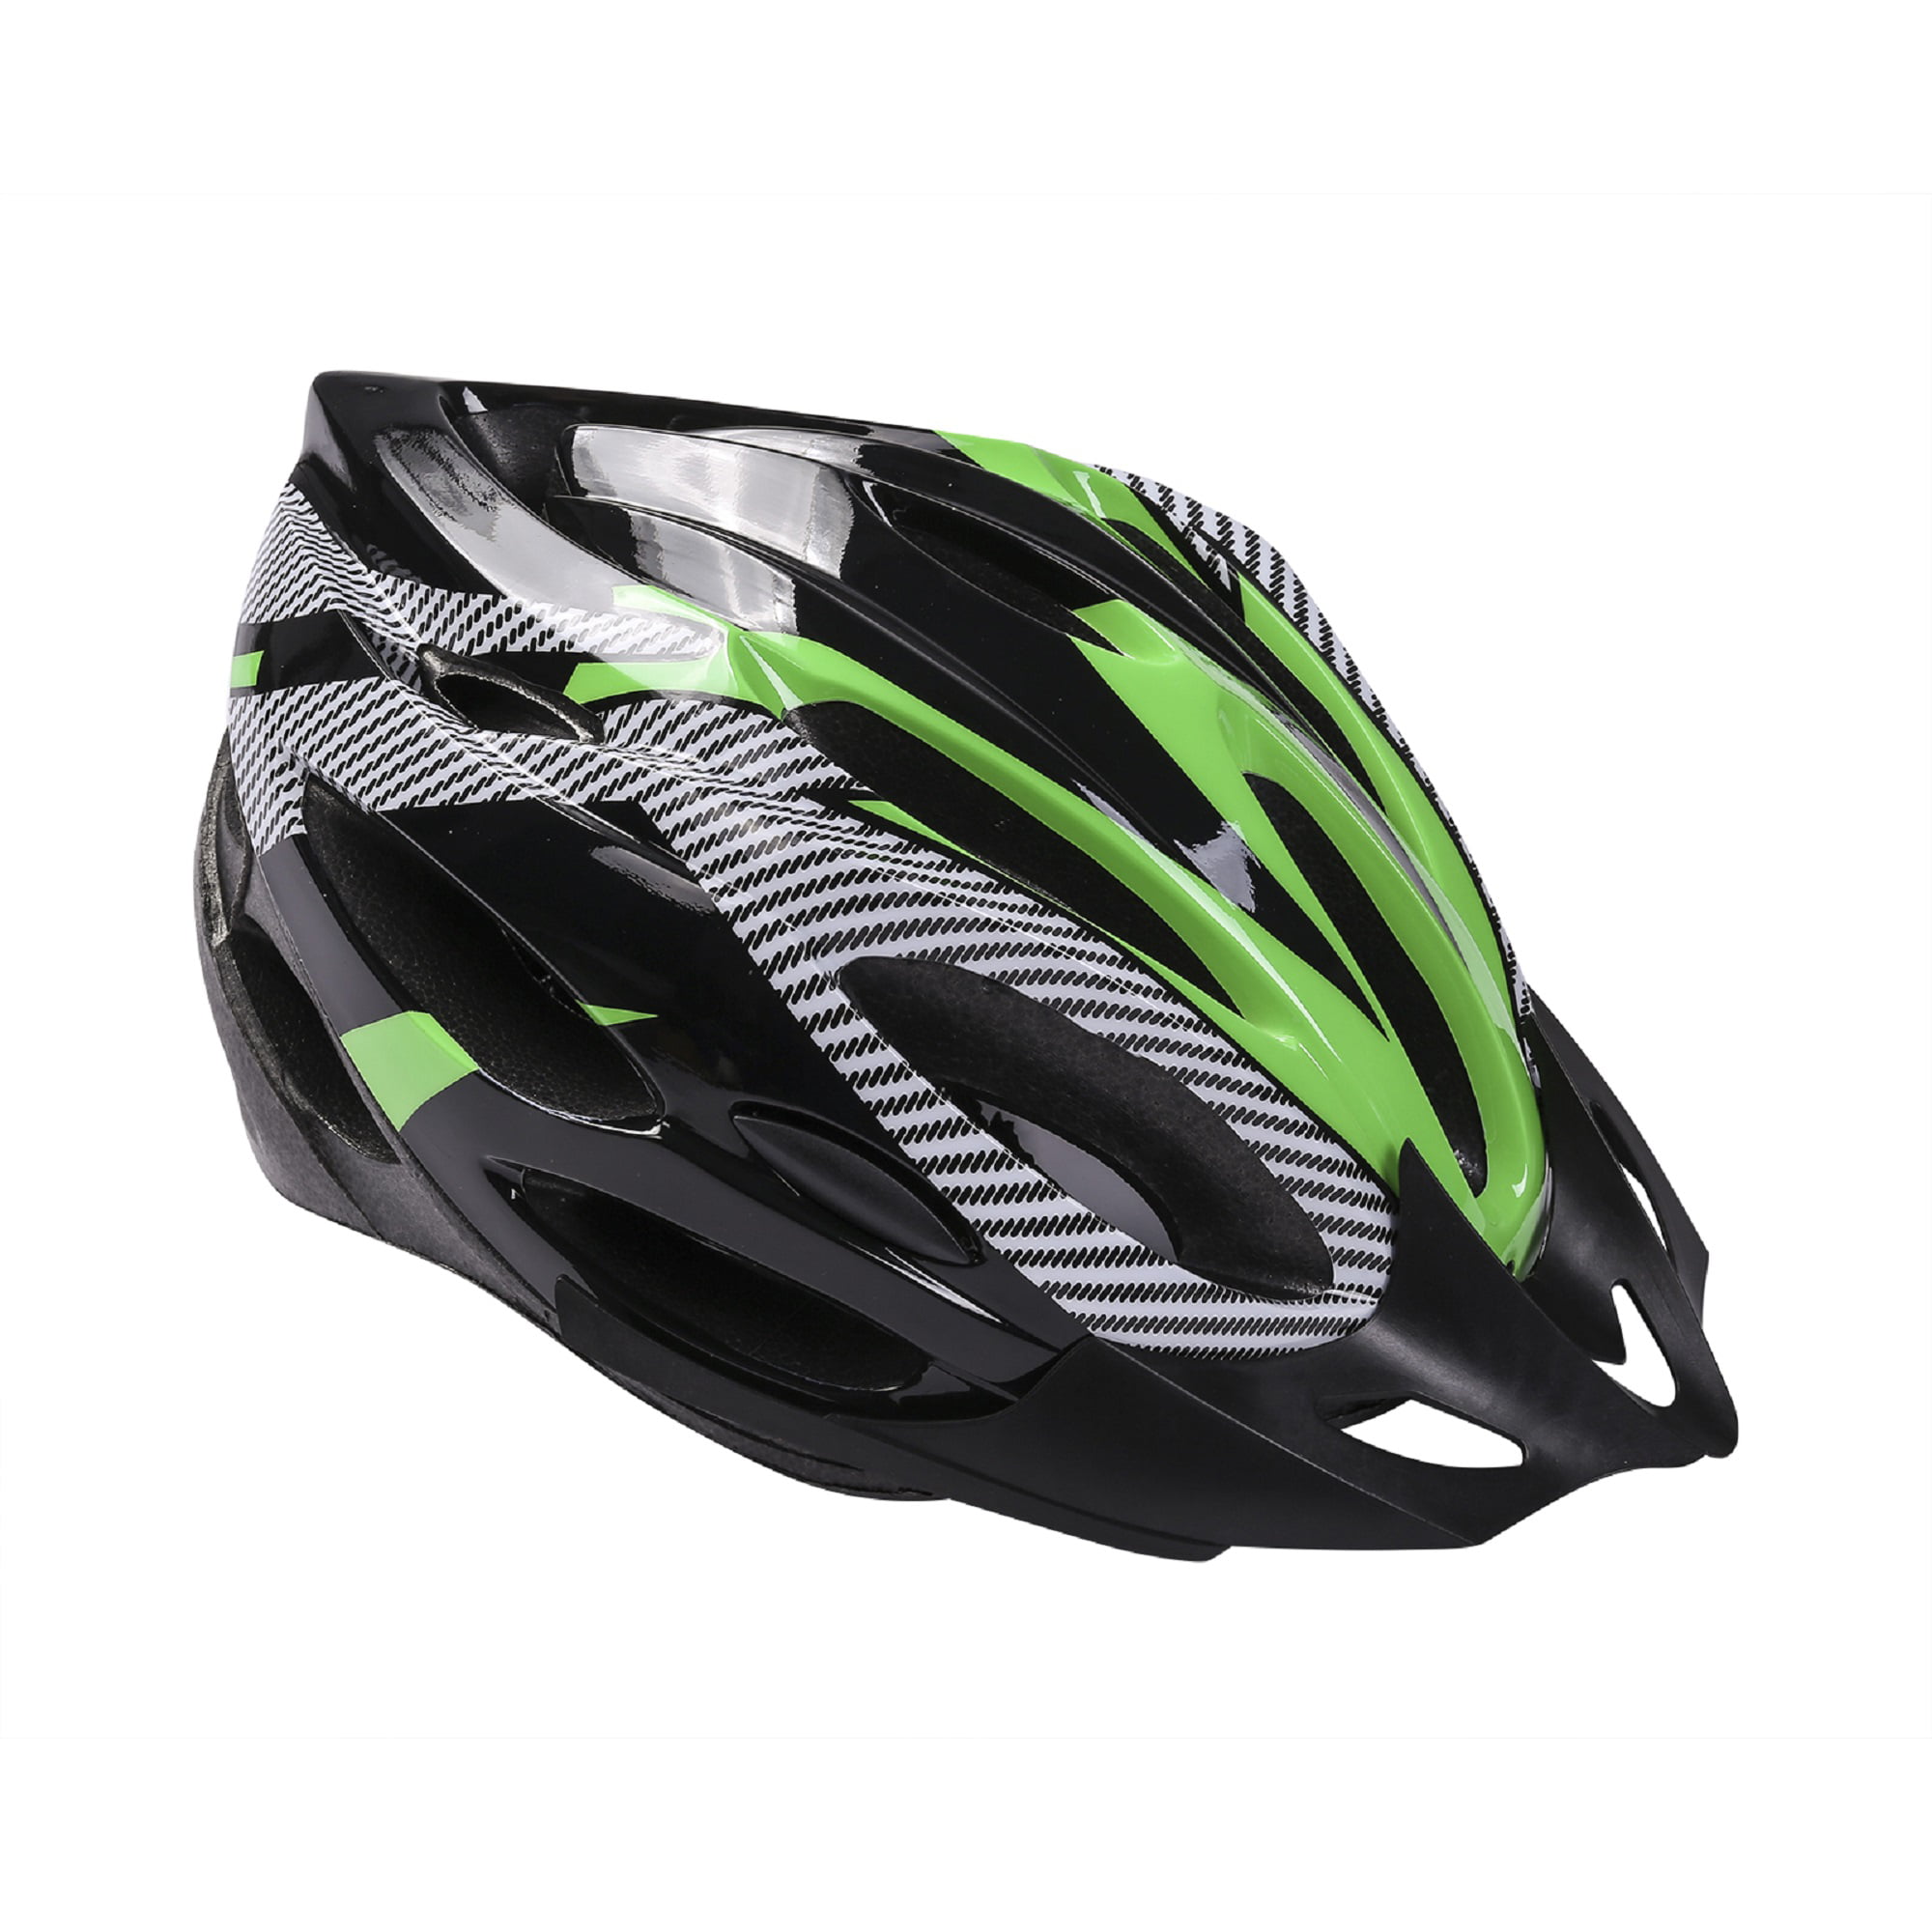 Adult Cycling Safety Helmet Road Mountain Bike Sports Adjustable Helmet 22 Holes 